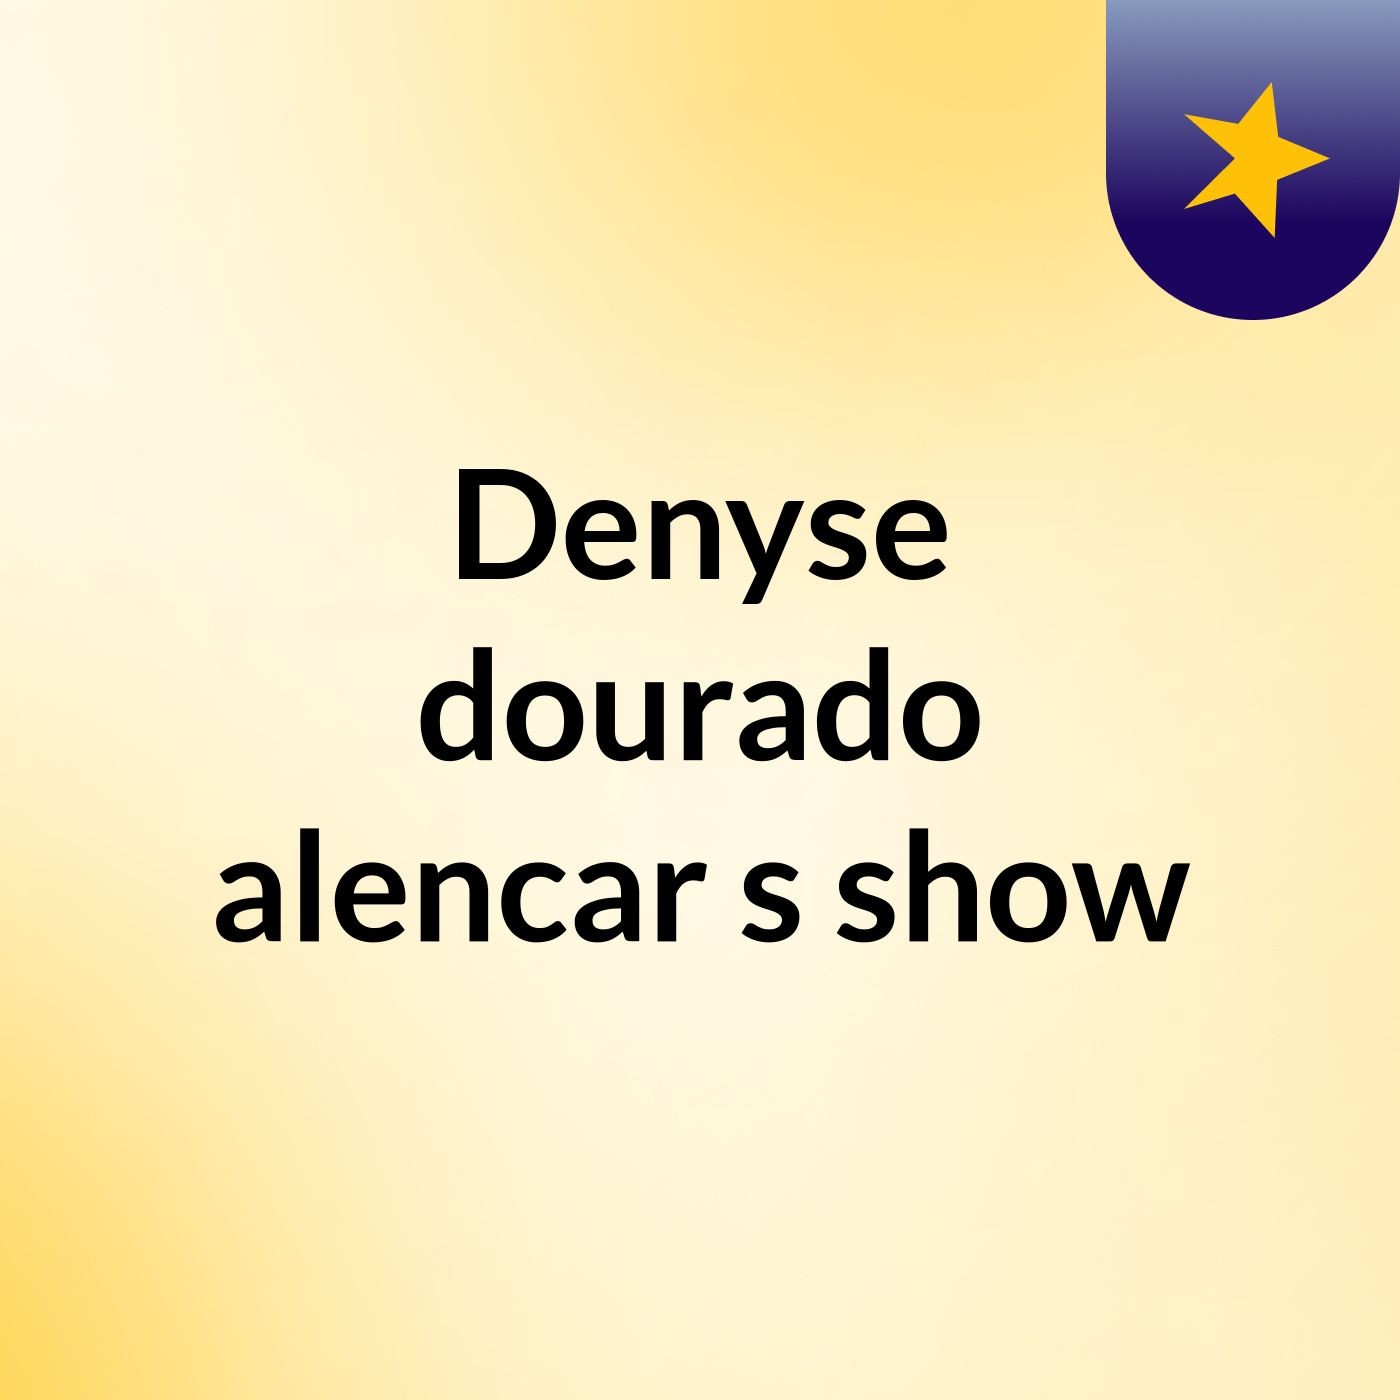 Denyse dourado alencar's show